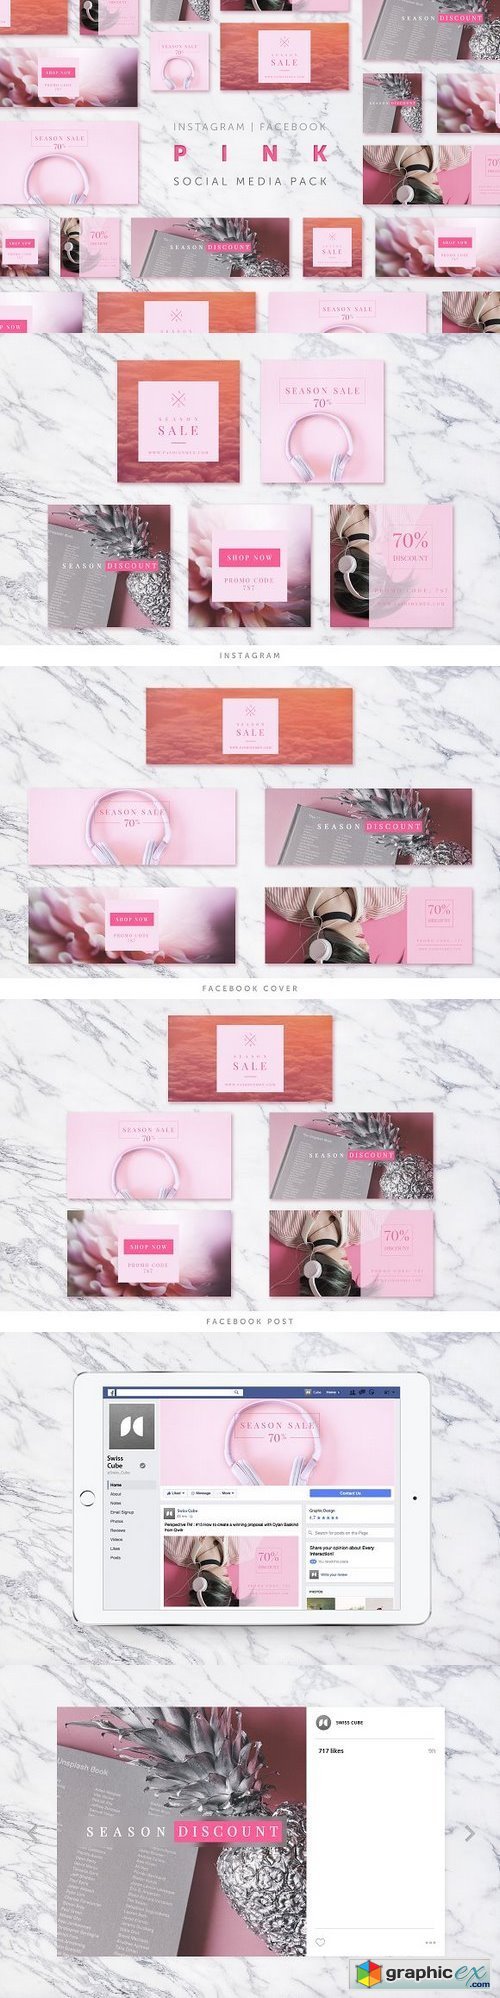 Pink Social Media Pack